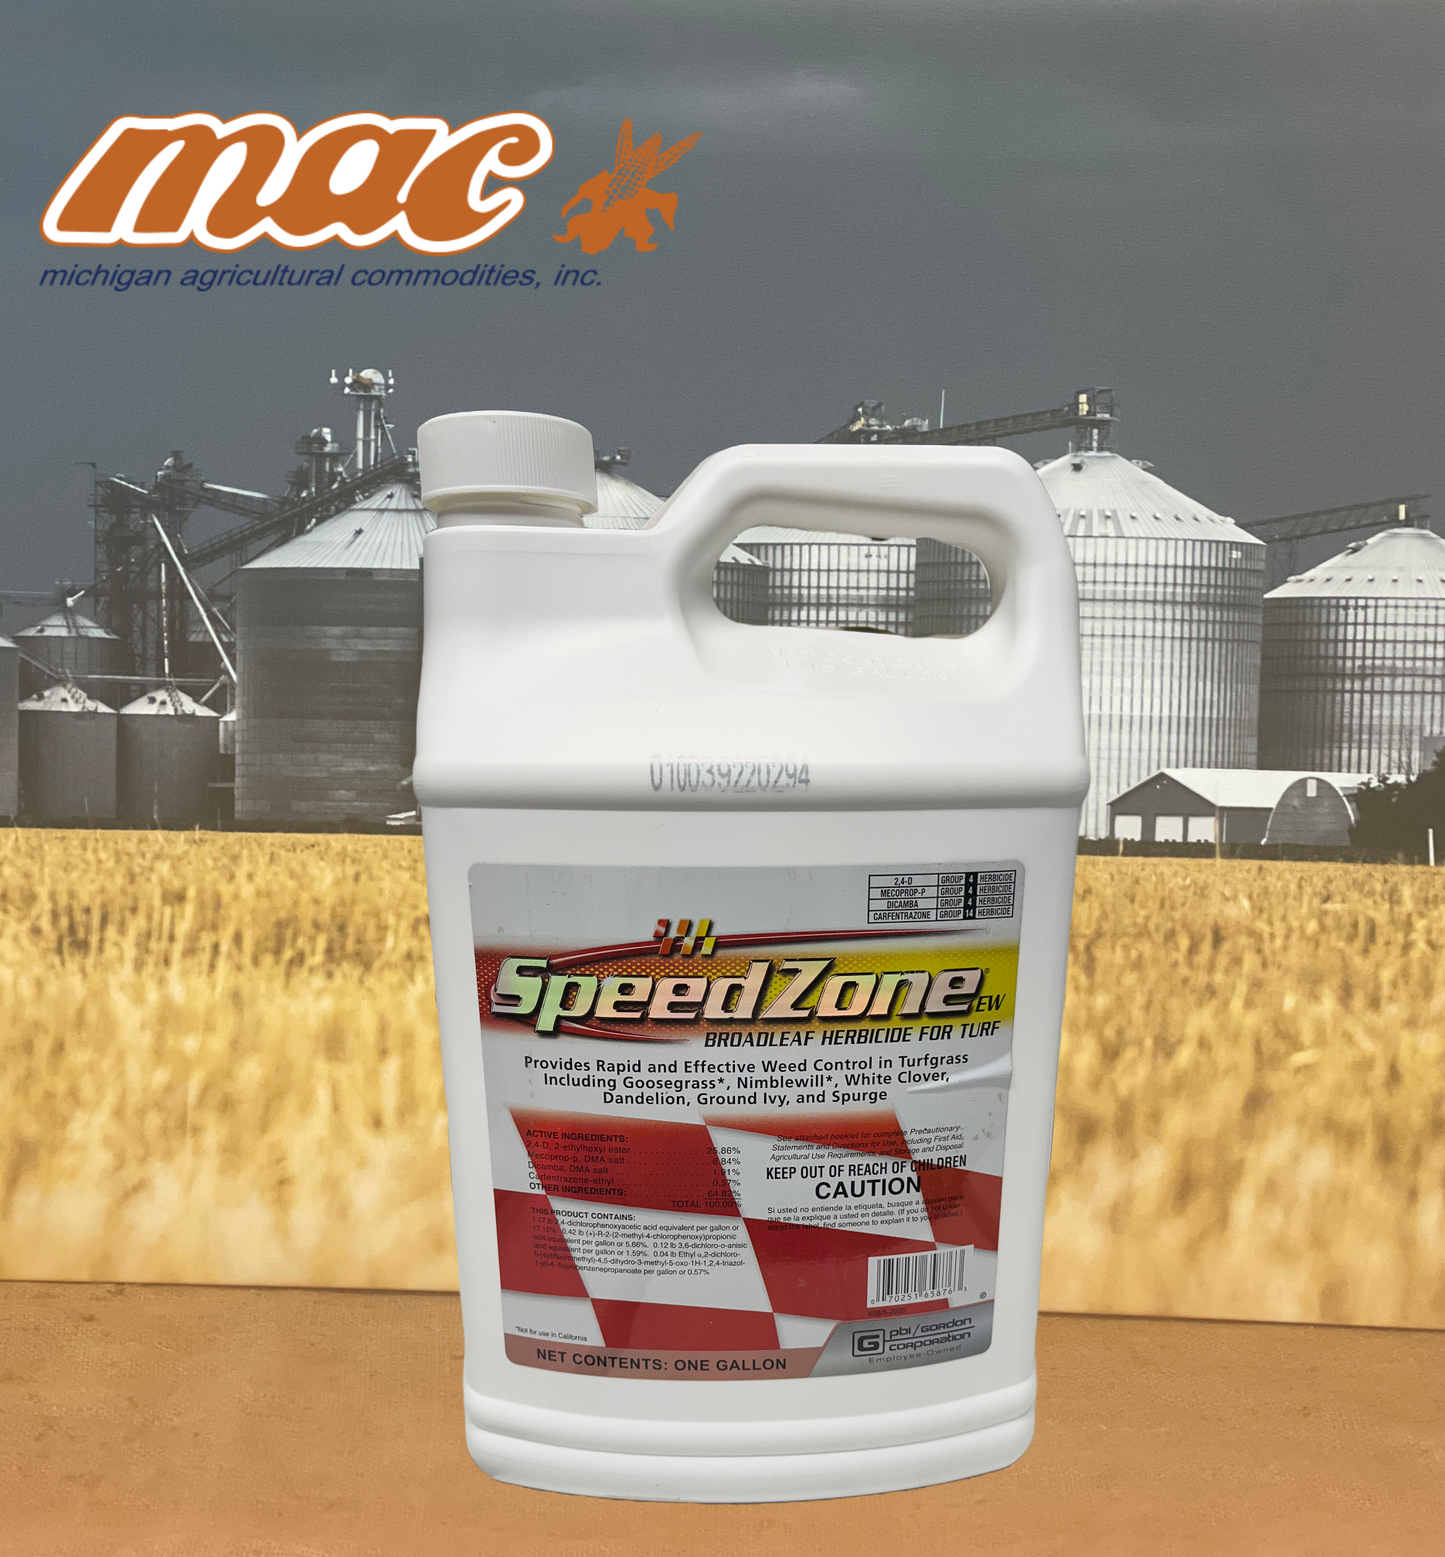 SpeedZone® Broadleaf Herbicide